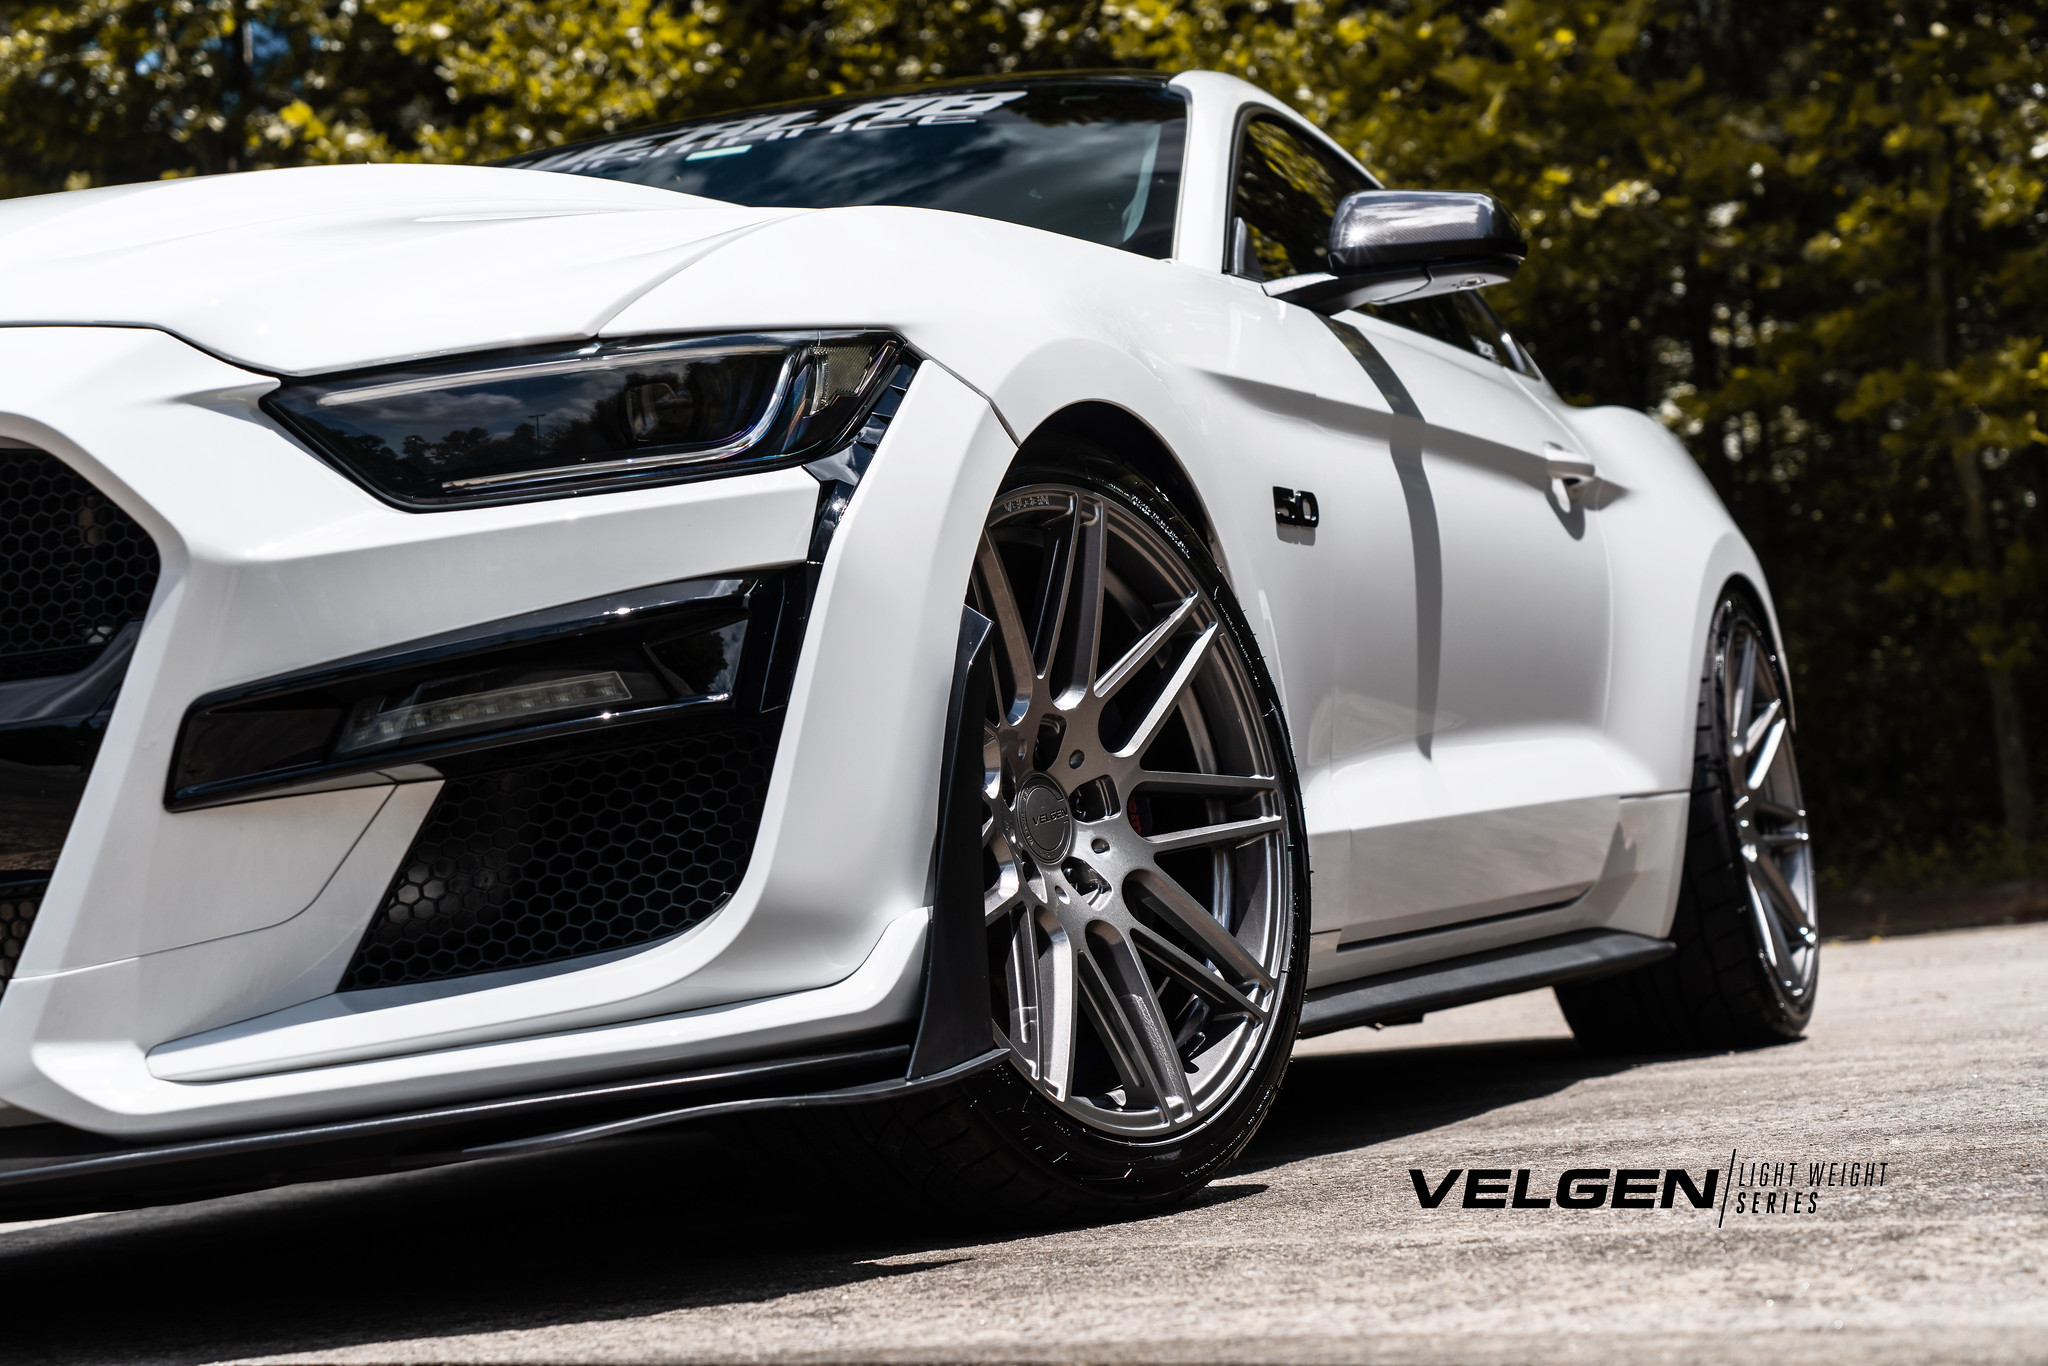 S650 Mustang Velgen wheels for your S650 Mustang | Vibe Motorsports 51219074721_d2cf5d4d15_k